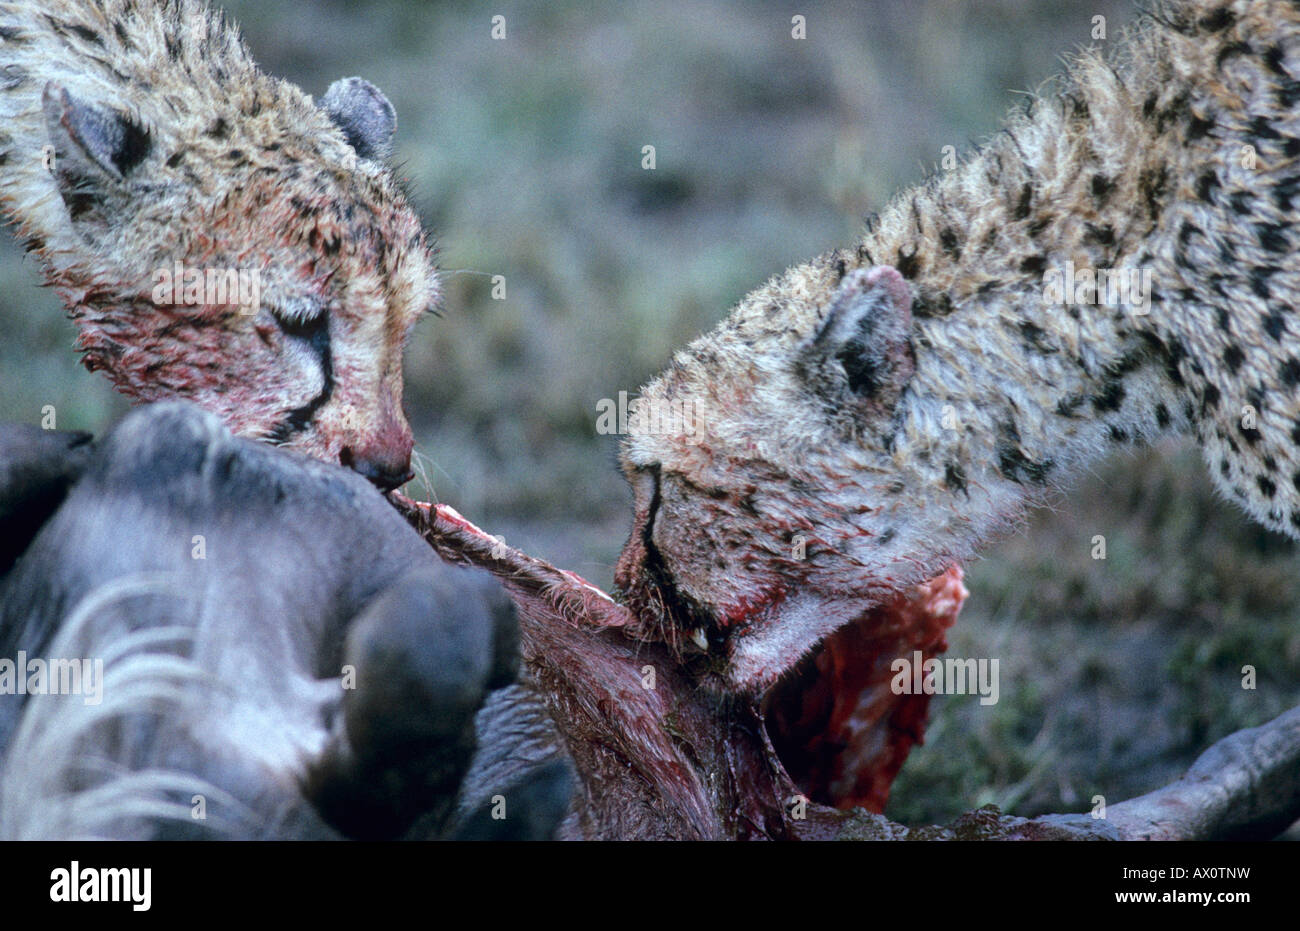 Two Cheetahs (Acinonyx jubatus) eating Stock Photo